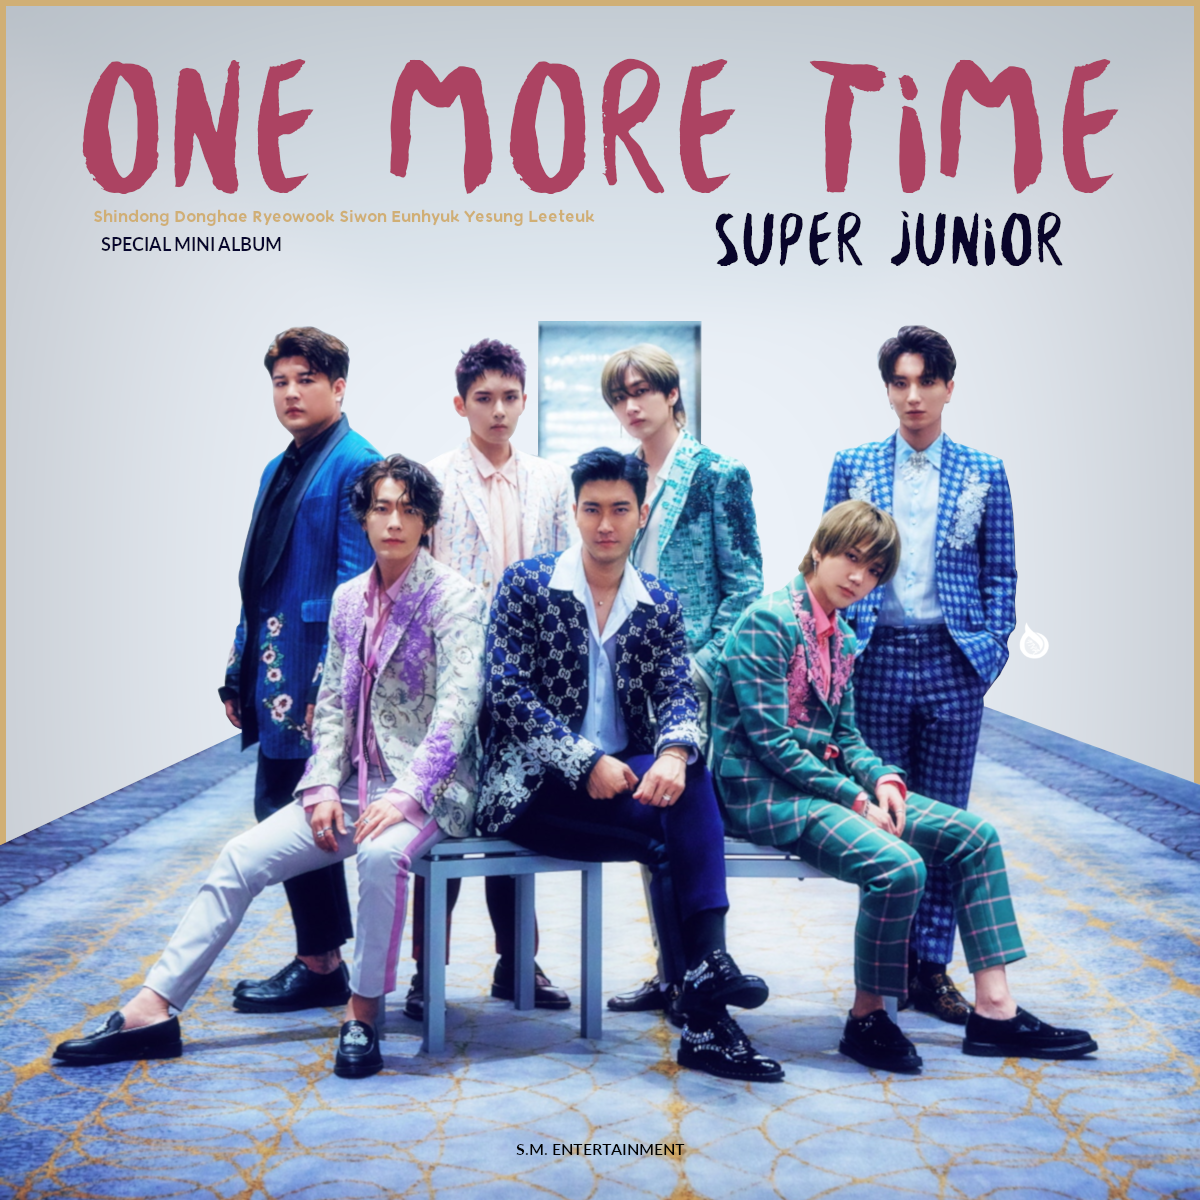 Super Junior - One More Time (Special Mini Album) by herestodesign on  DeviantArt